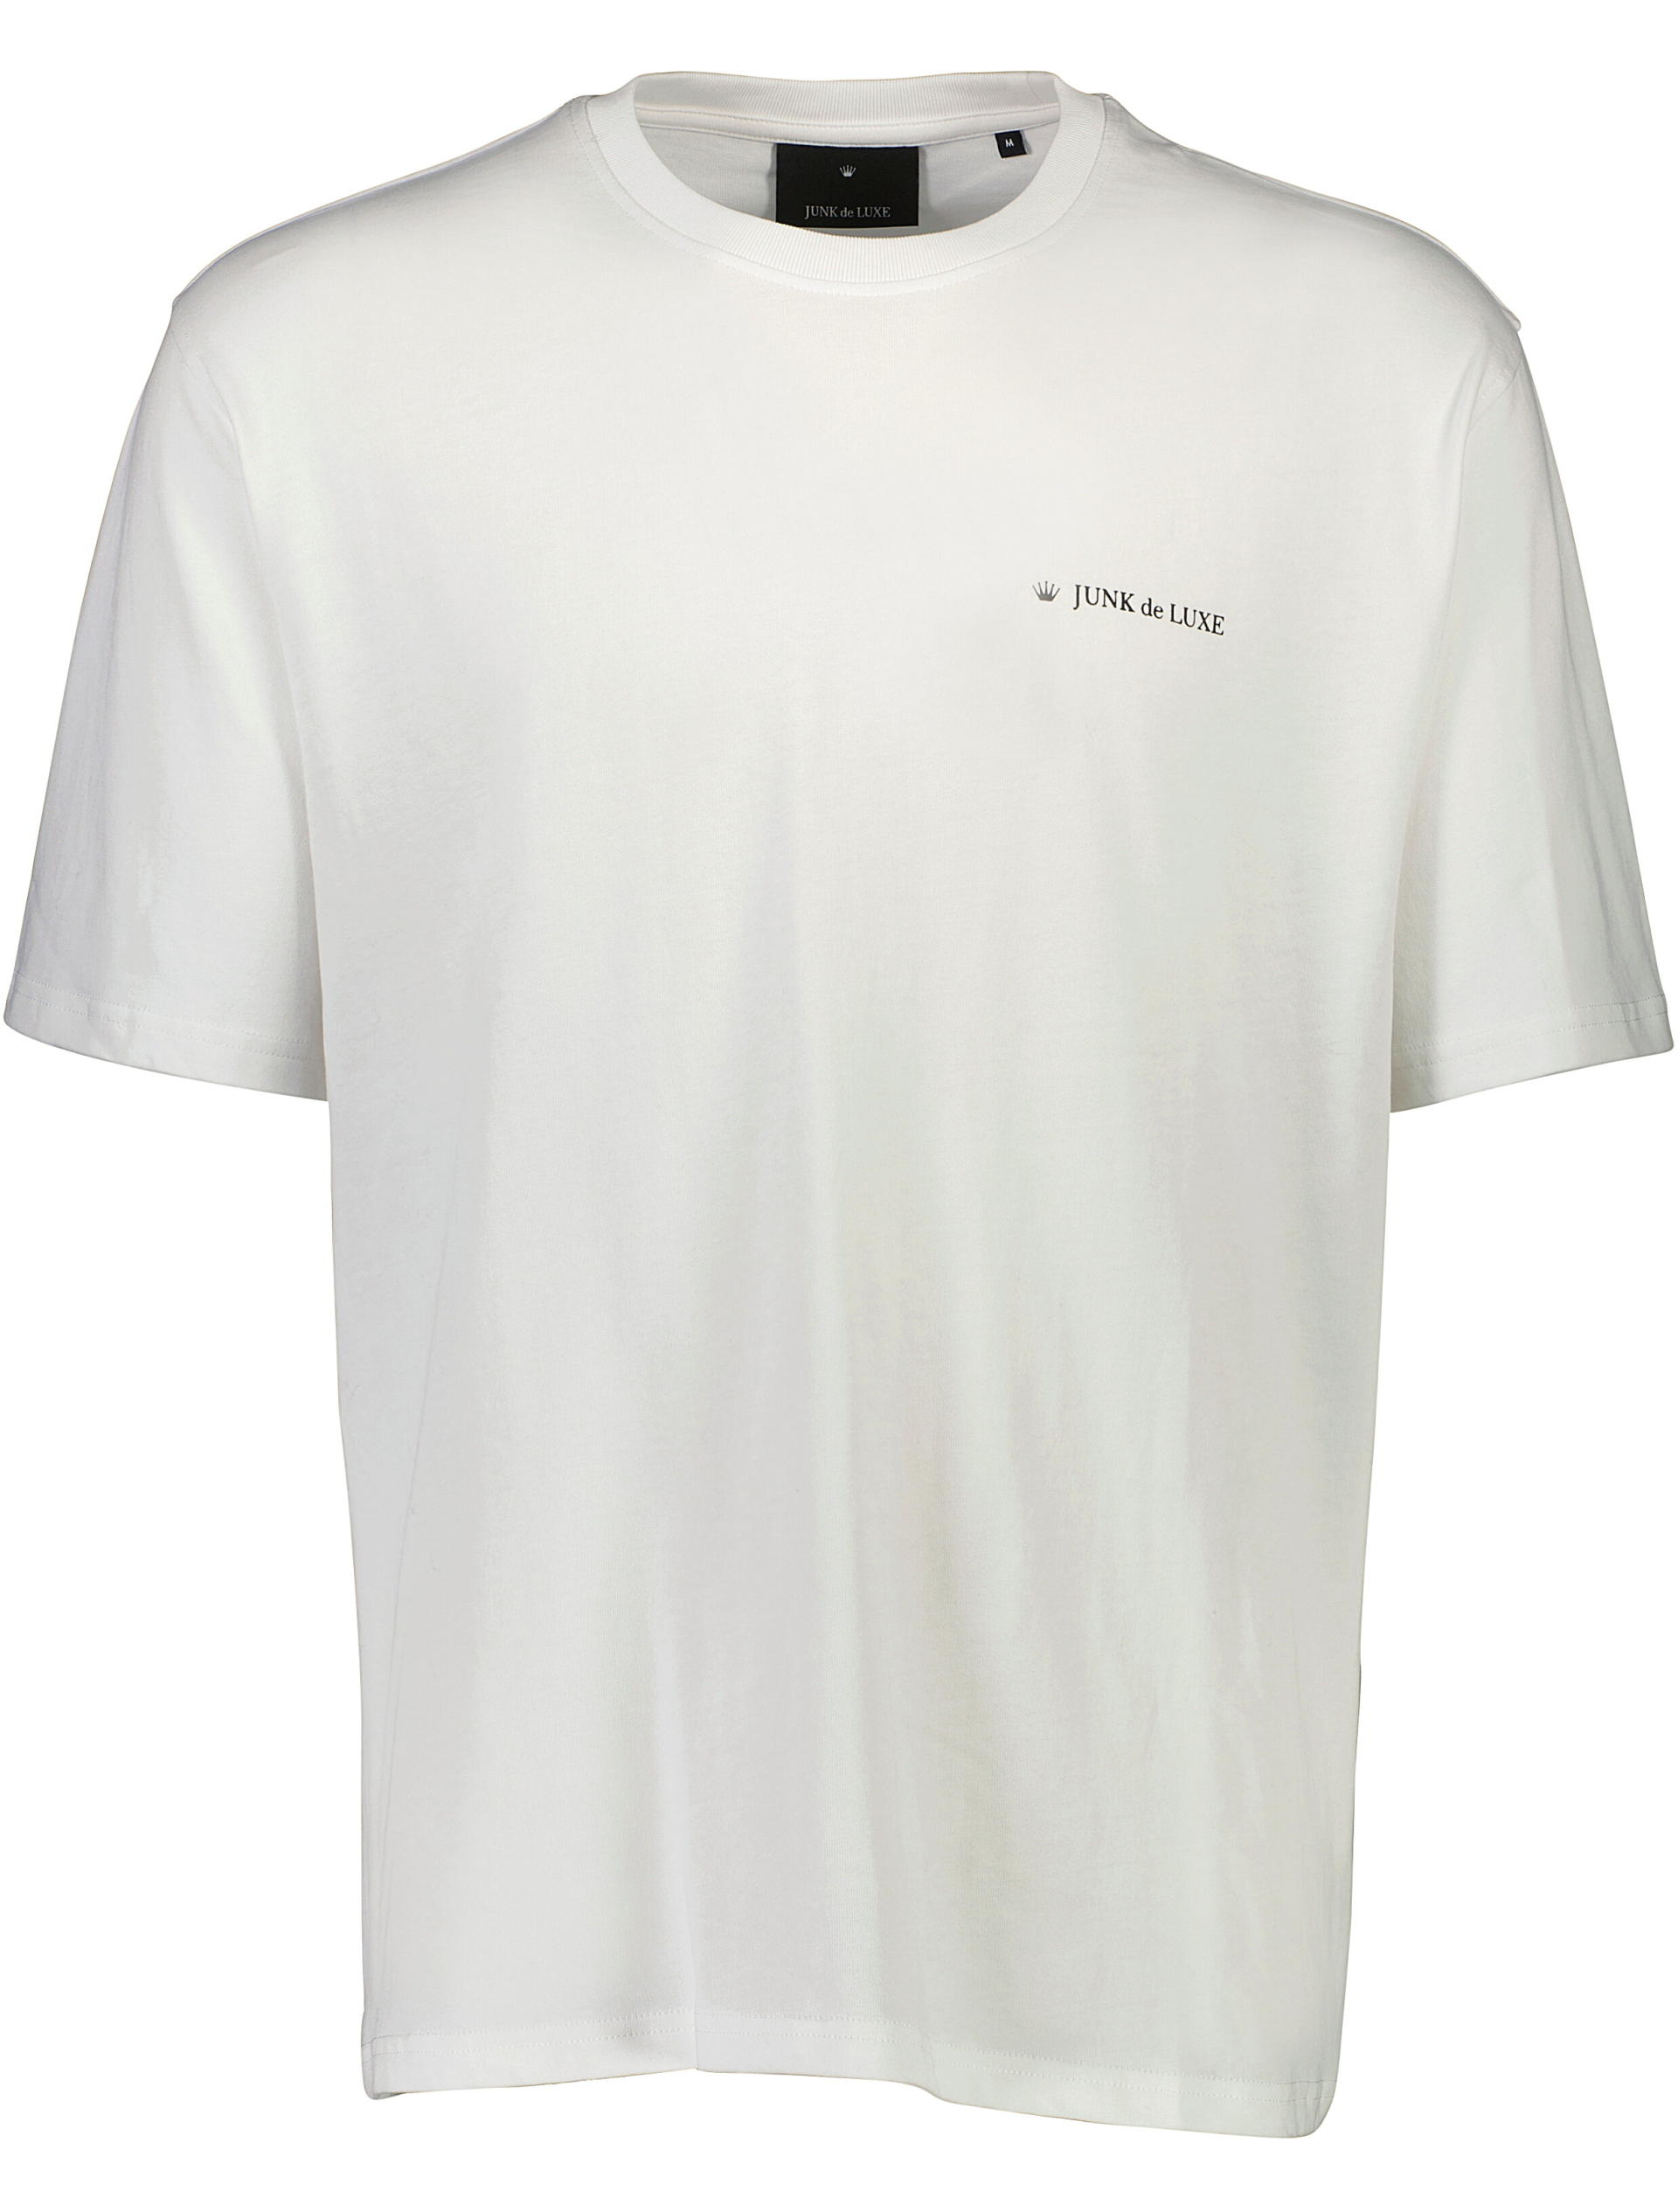 Junk de Luxe T-shirt hvid / white